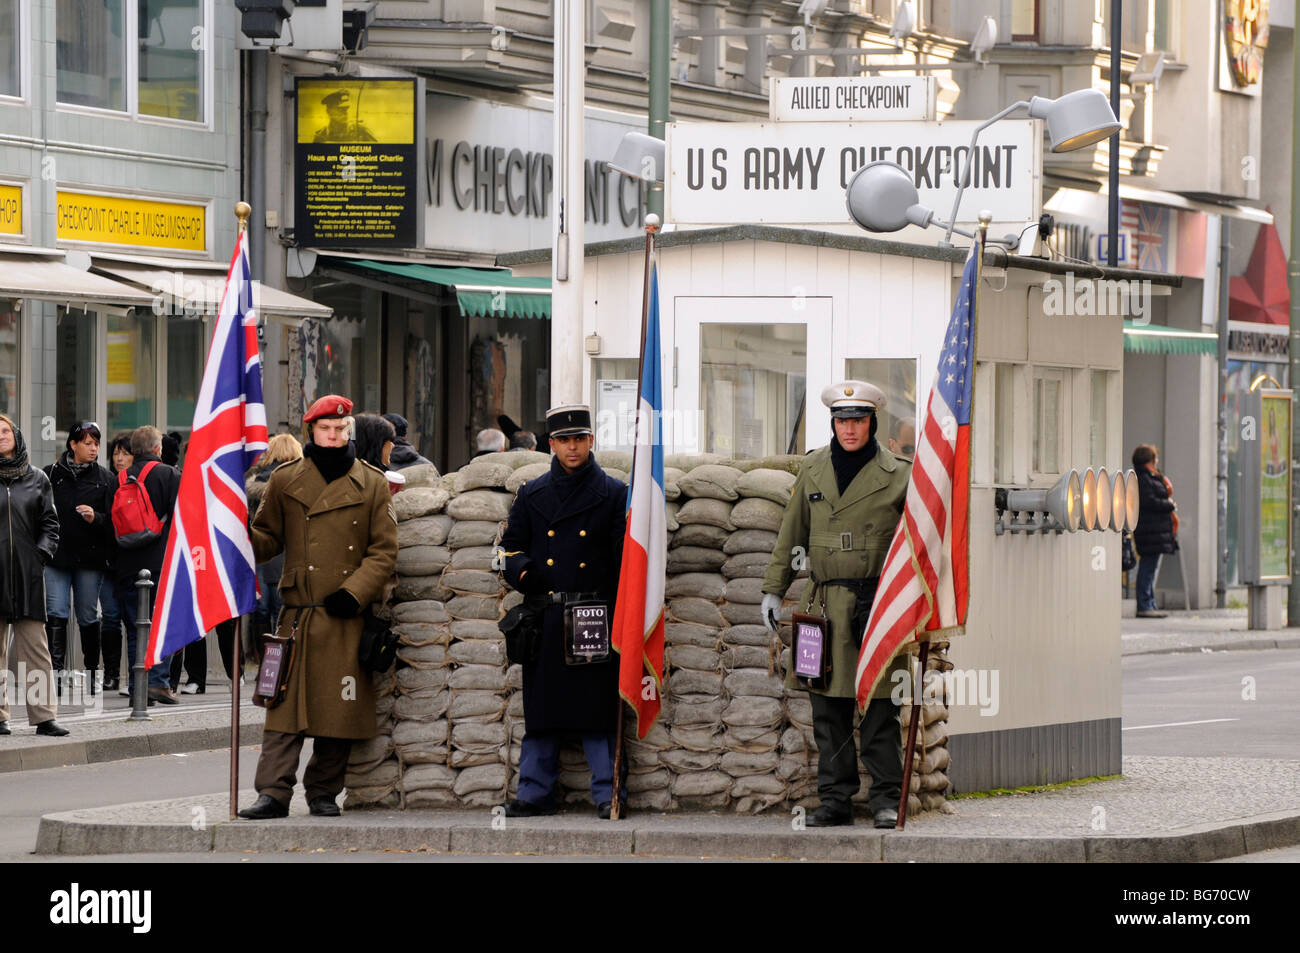 U.S. Army Checkpoint touristischen Stand, Checkpoint Charlie, Berlin. Stockfoto